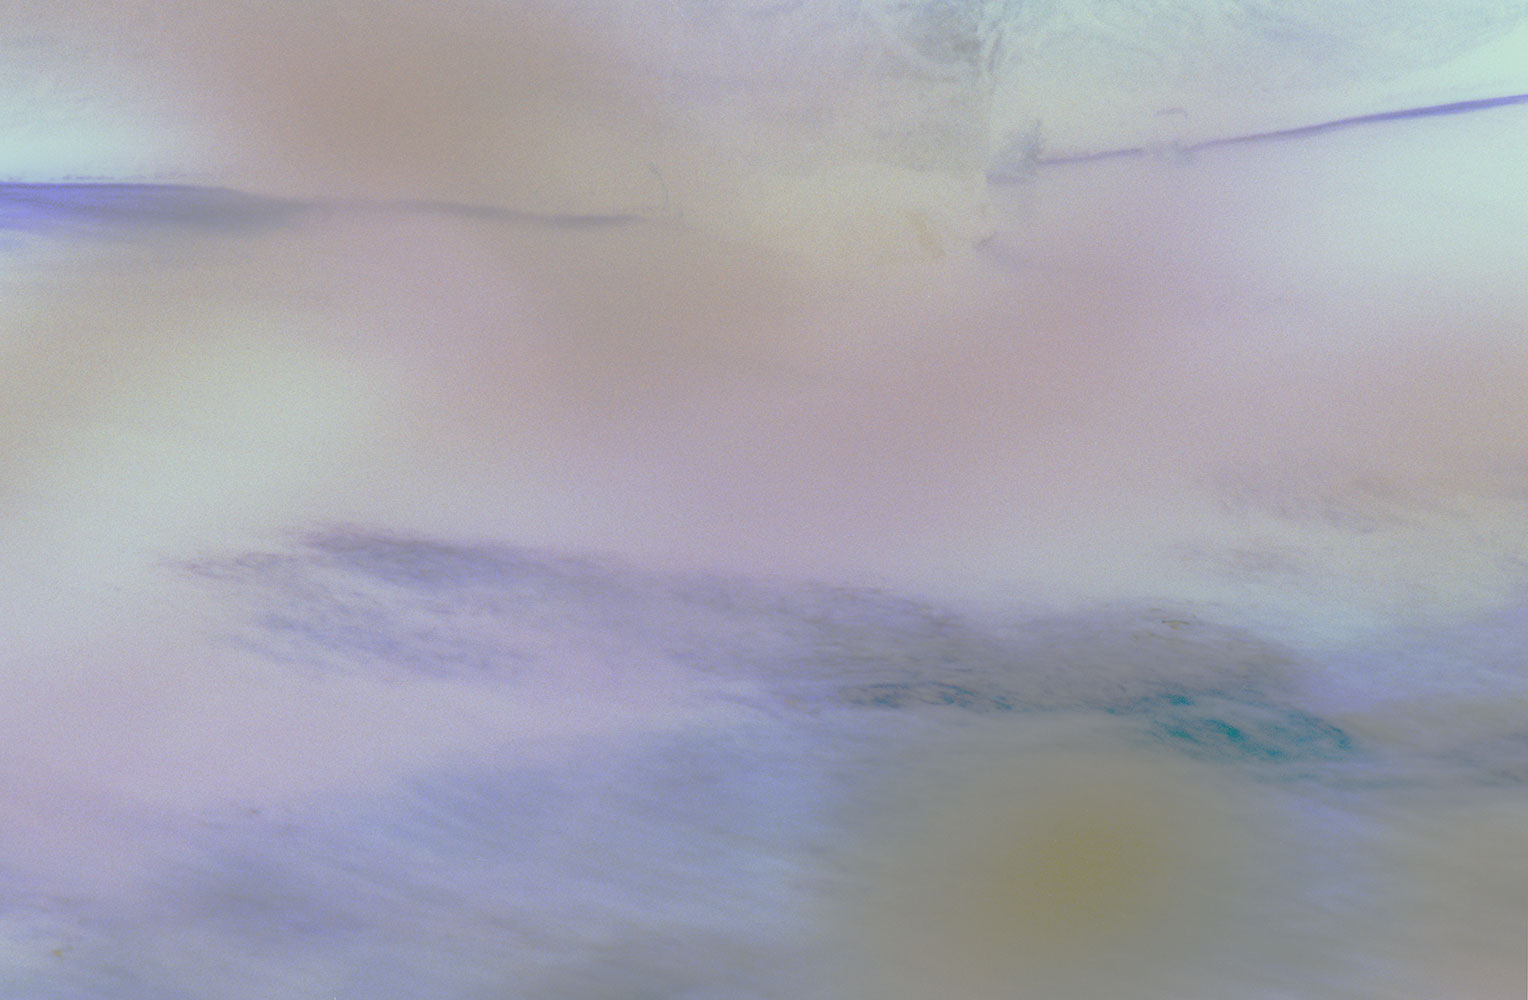 away-from-sorrow:      broken     abstract-landscape   watercolor   ranges      melancholy    heartbreak     mountains     mist    